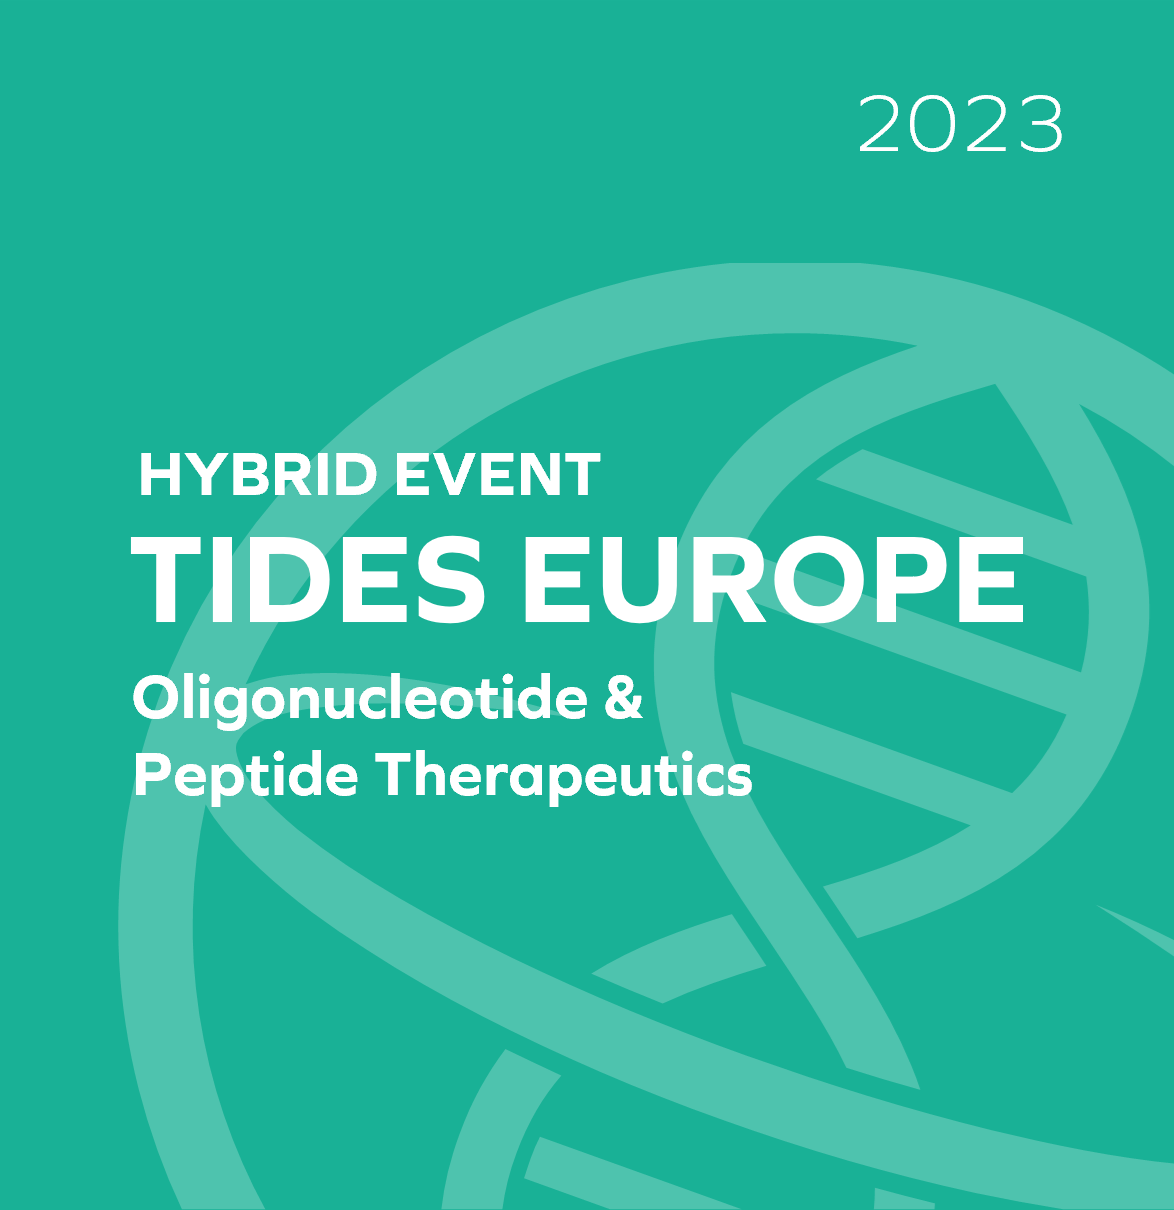 TIDES Europe 2023: Oligonucleotide & Peptide Therapeutics 